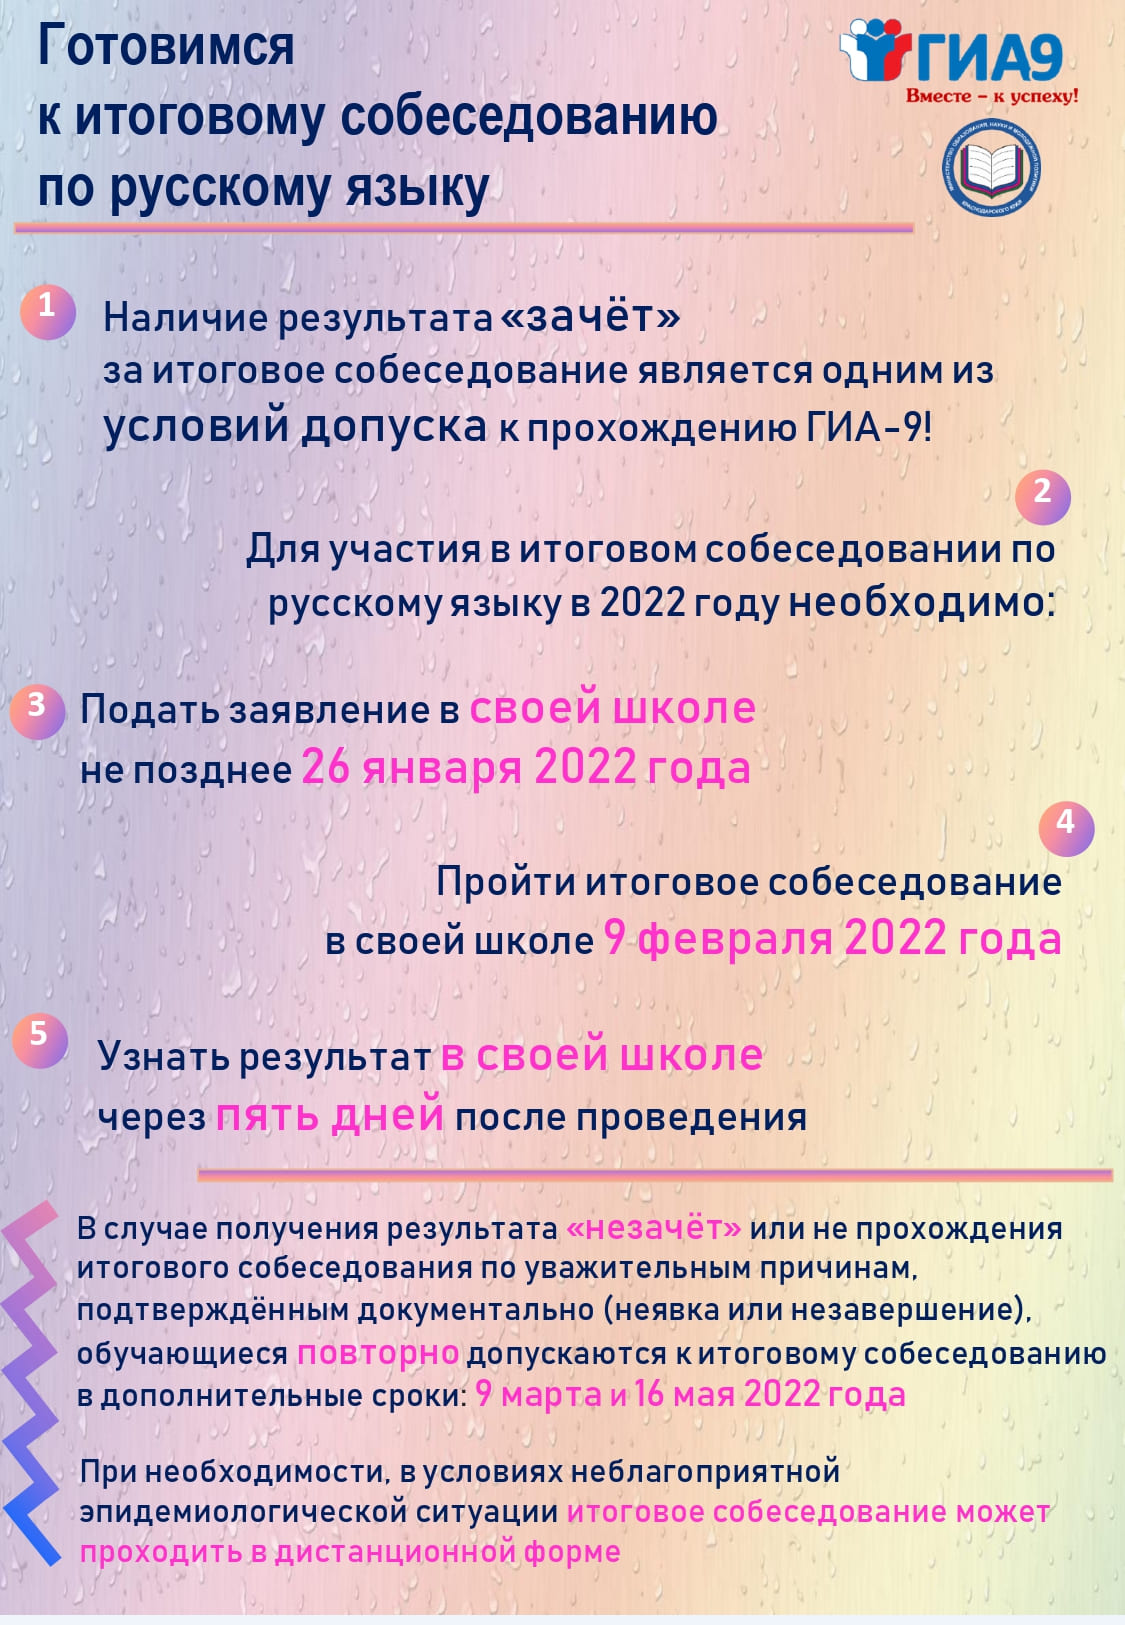  сроки проведения ознакомление 2022